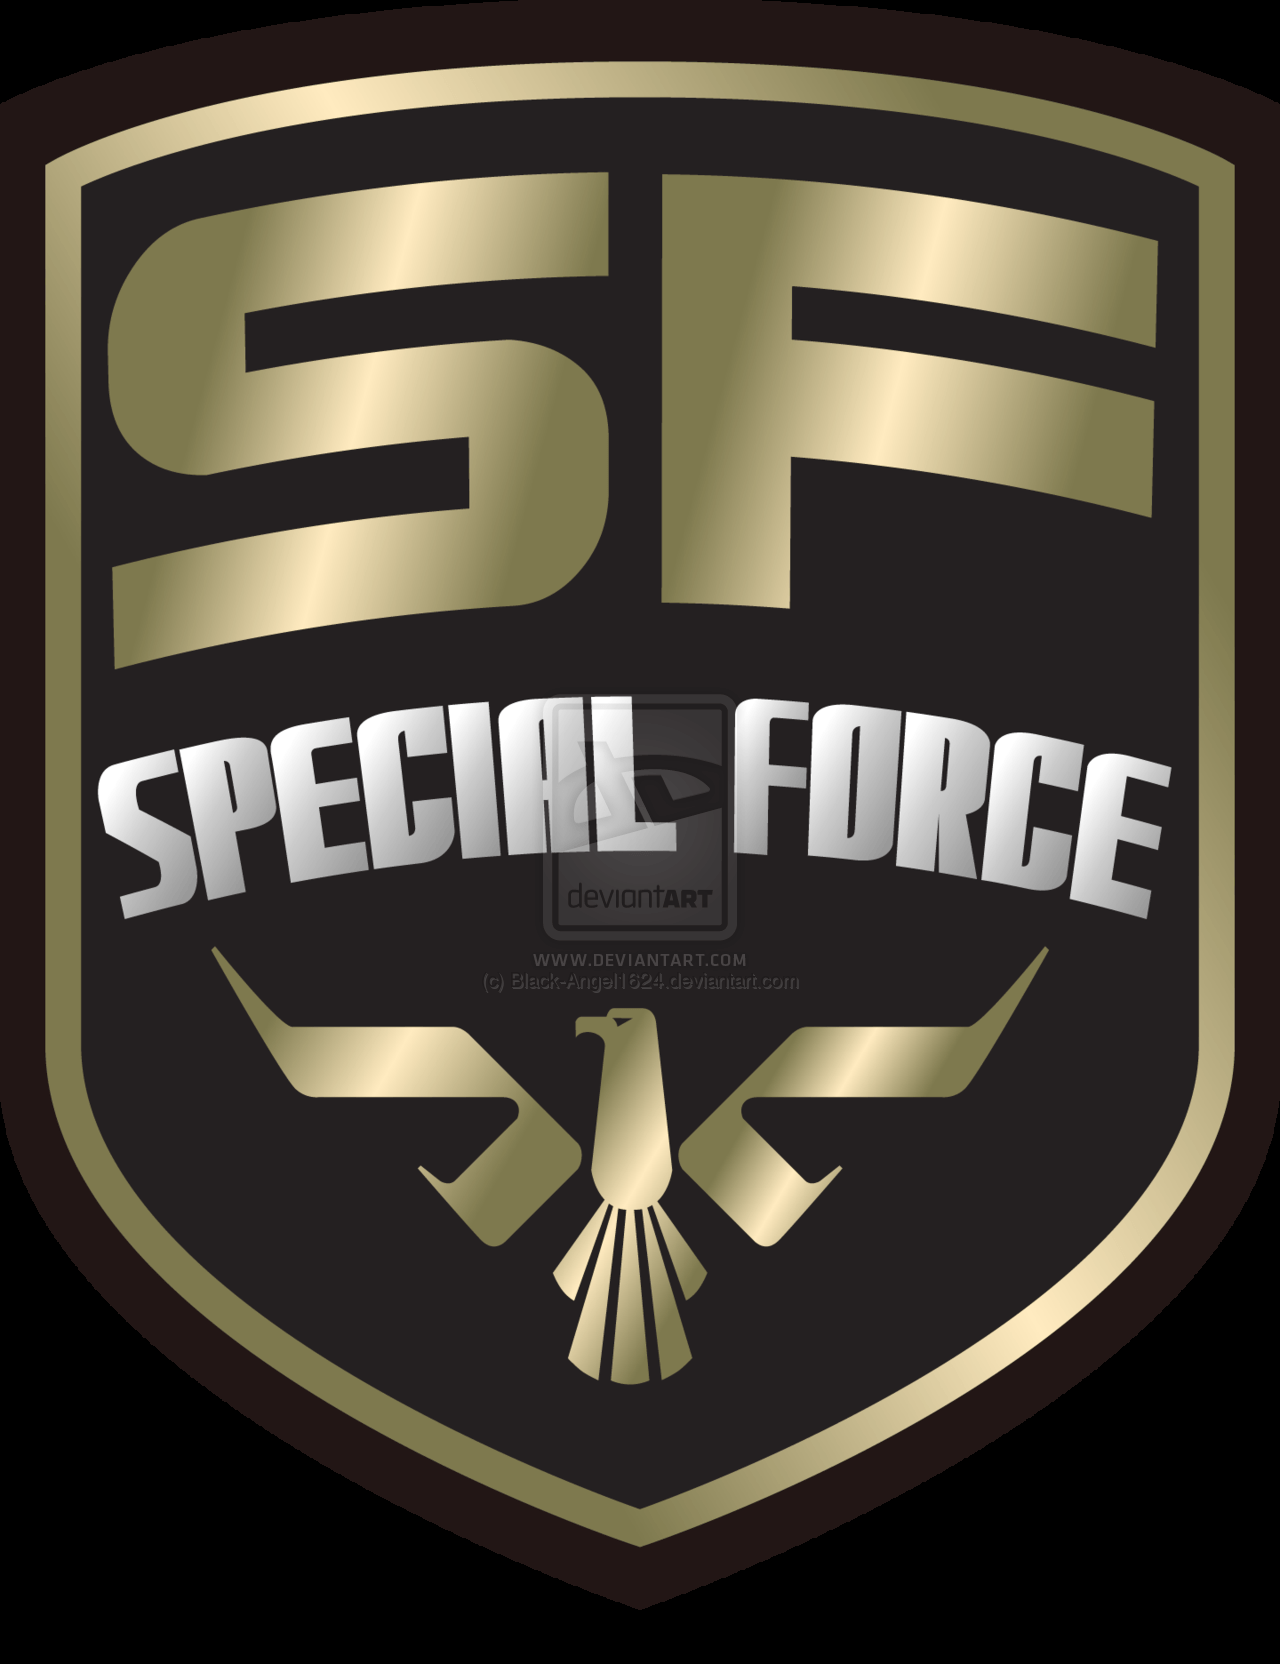 special forces logo 3. HD Wallpaper Buzz